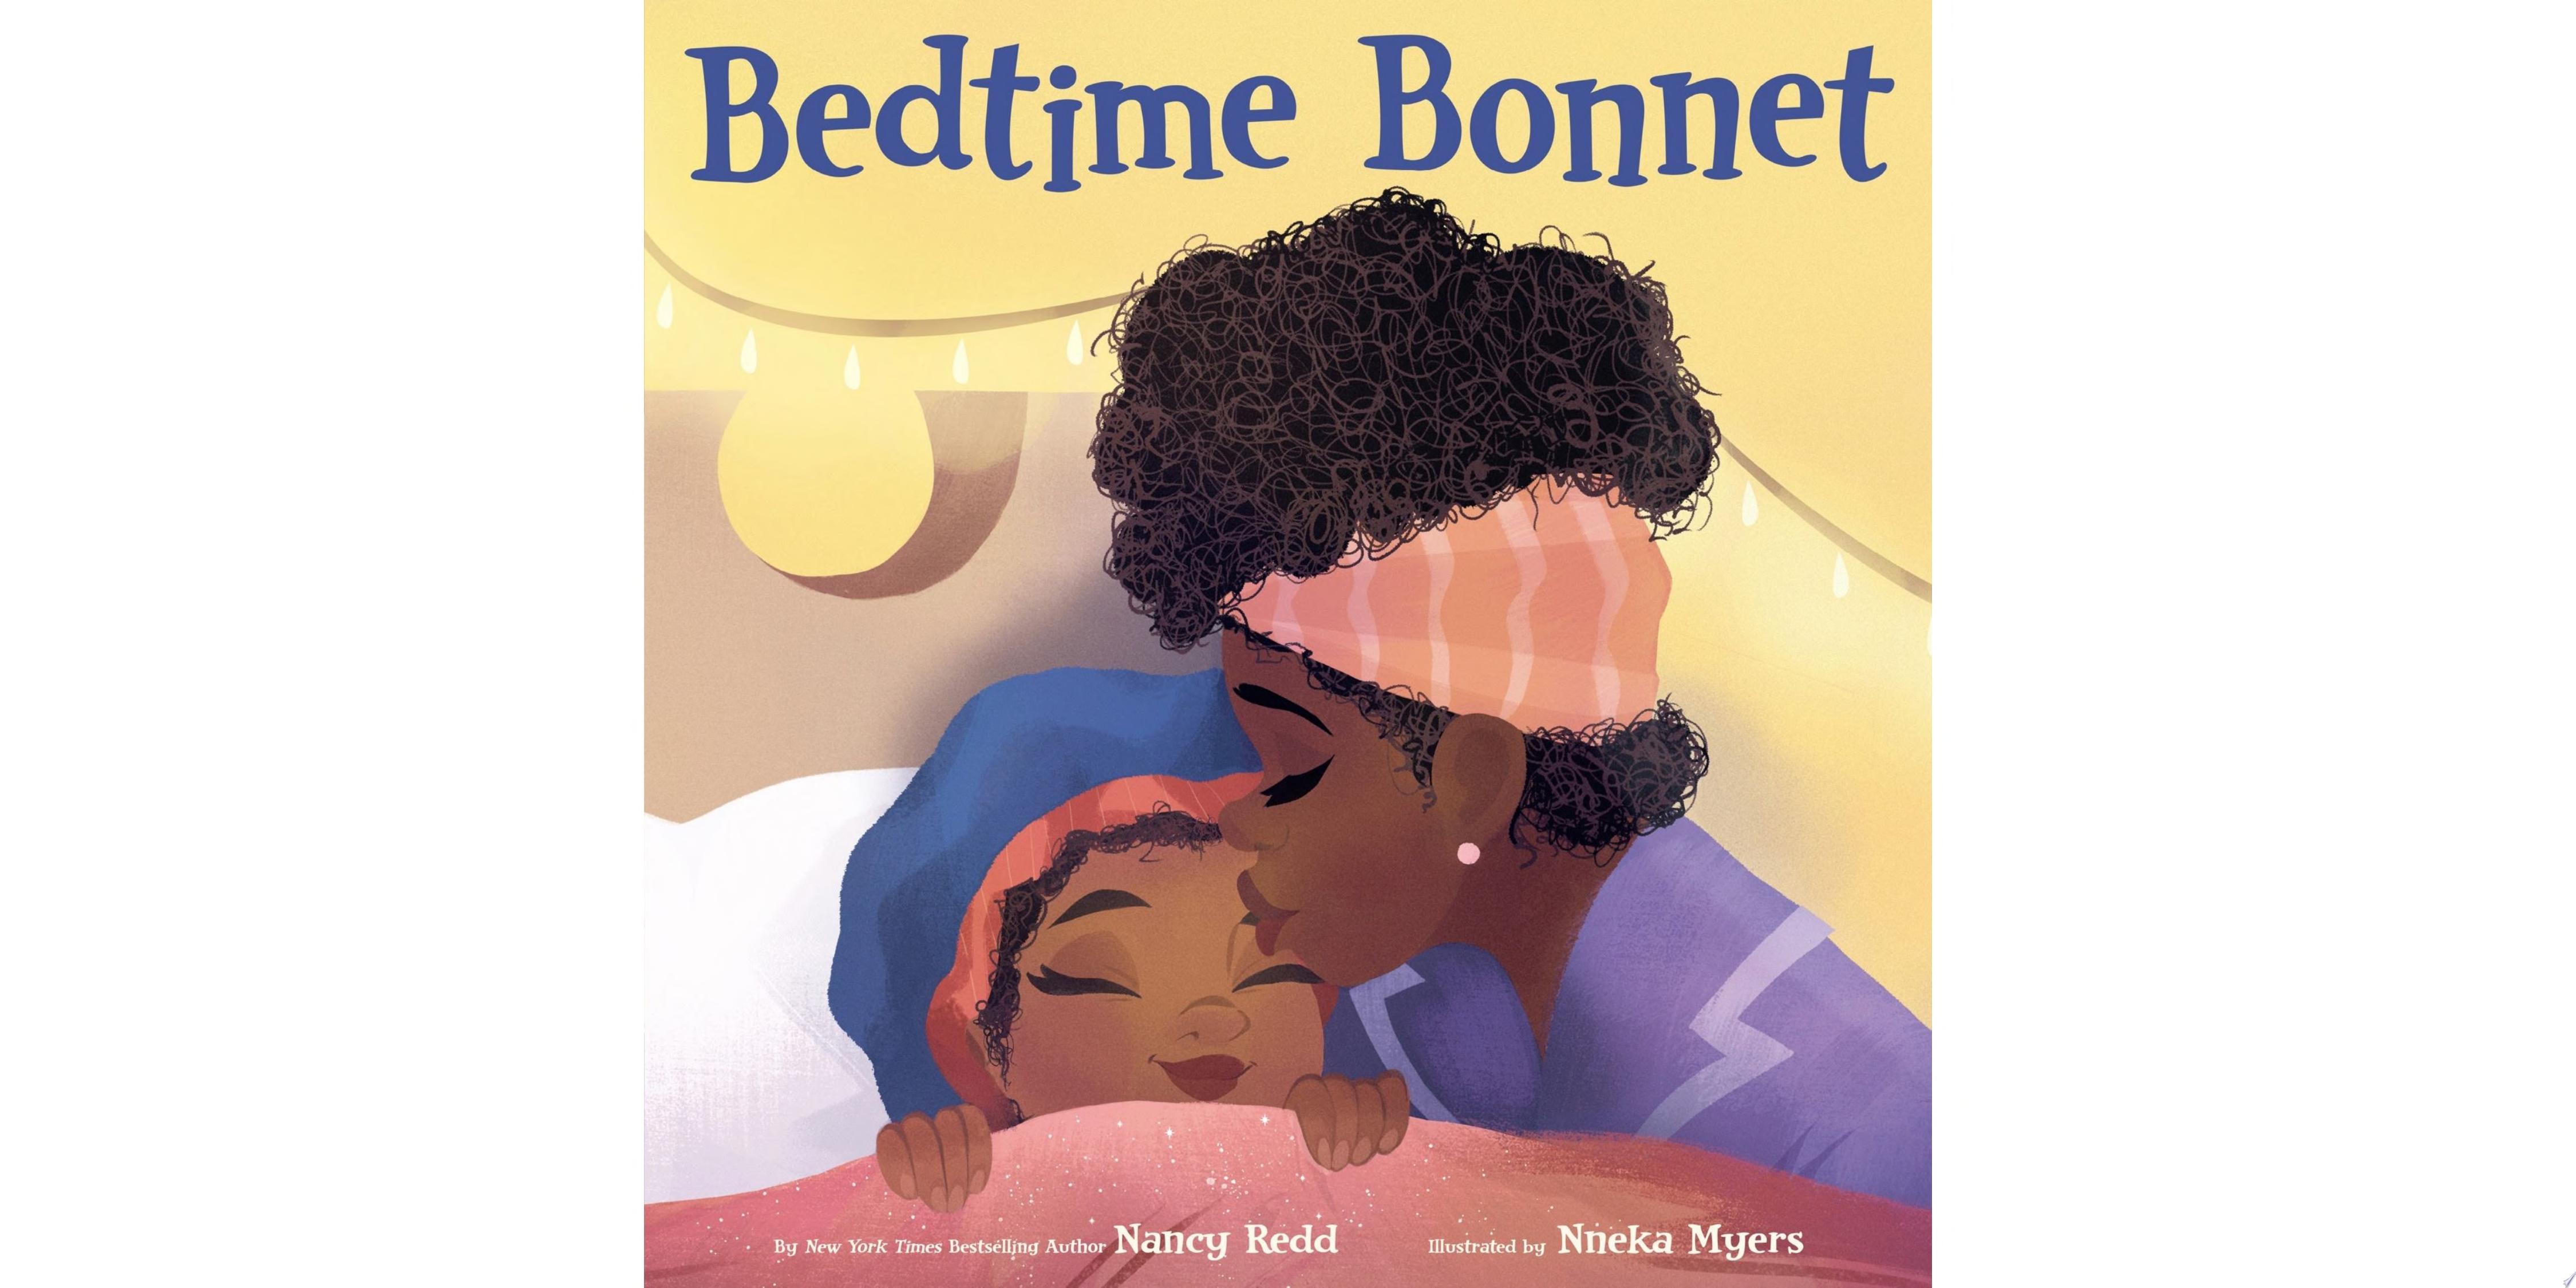 Image for "Bedtime Bonnet"